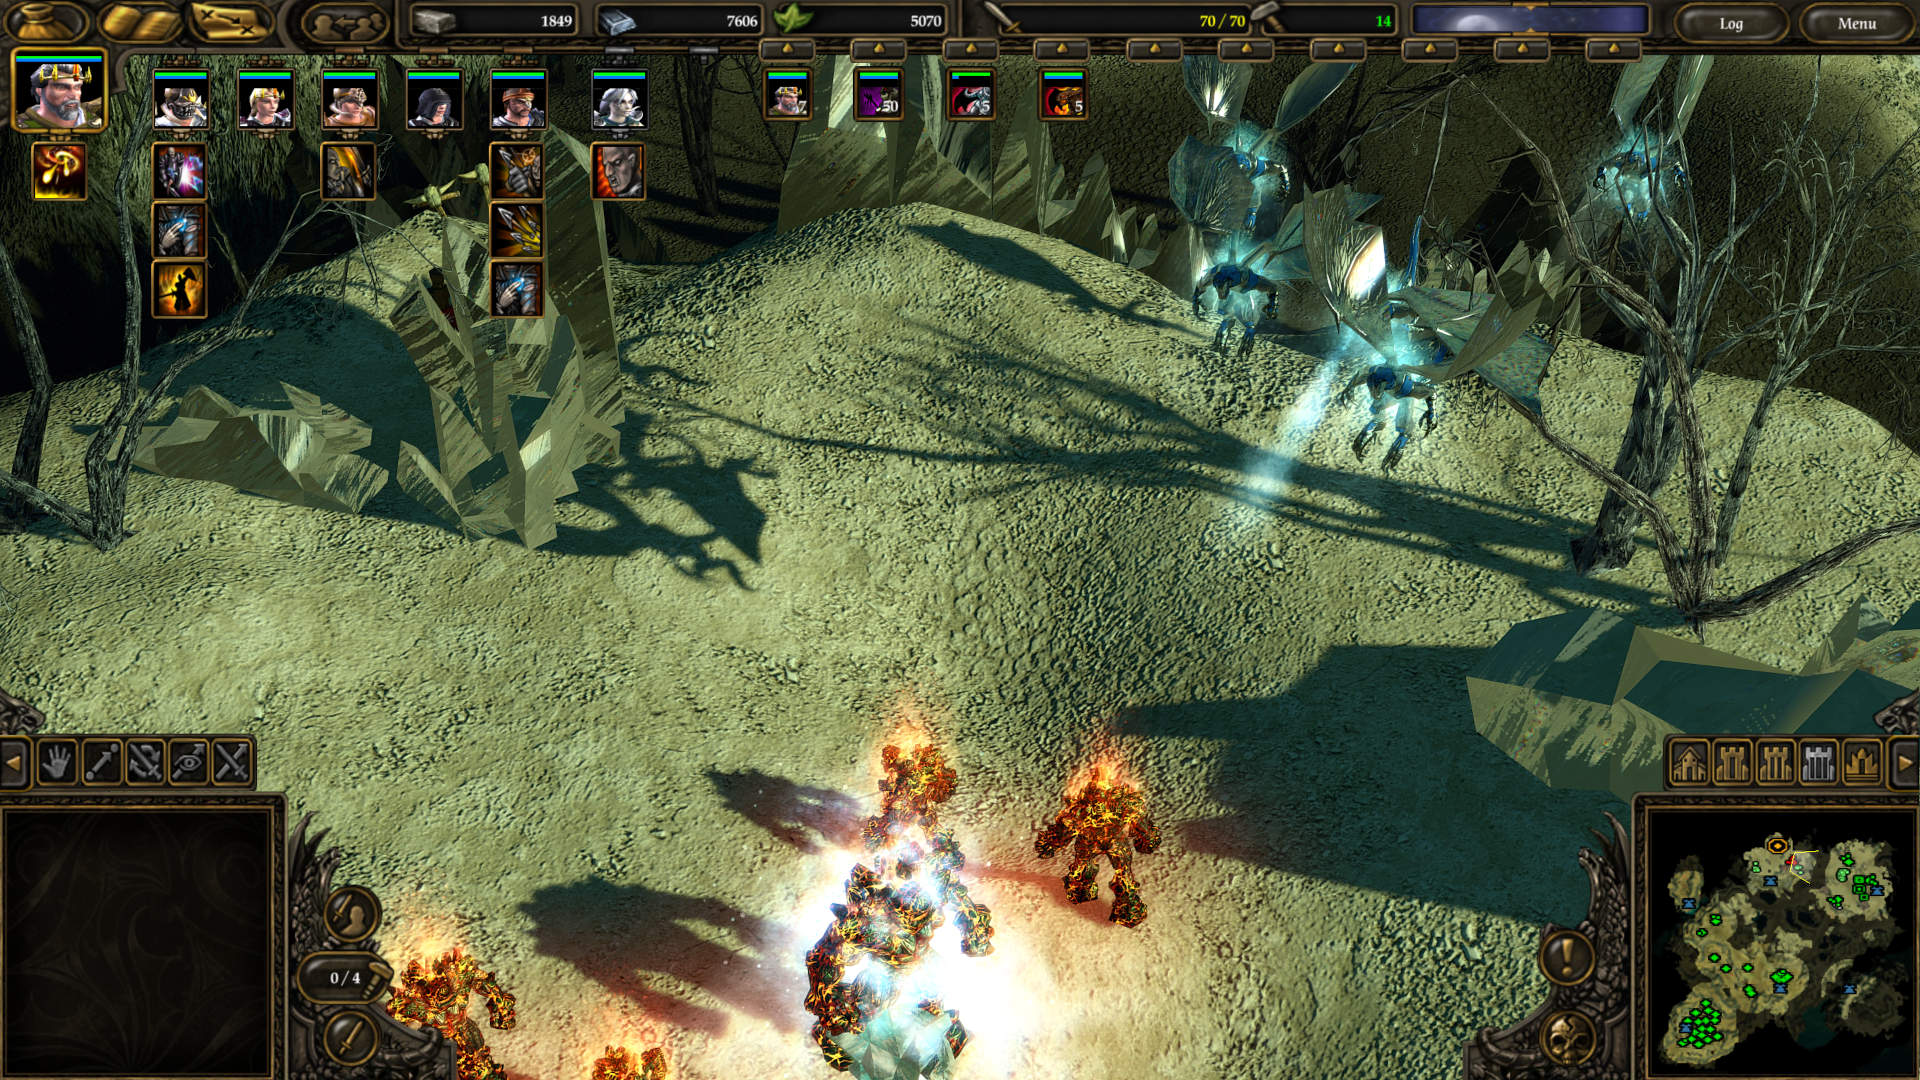 Flying gargoyles attacking elementals